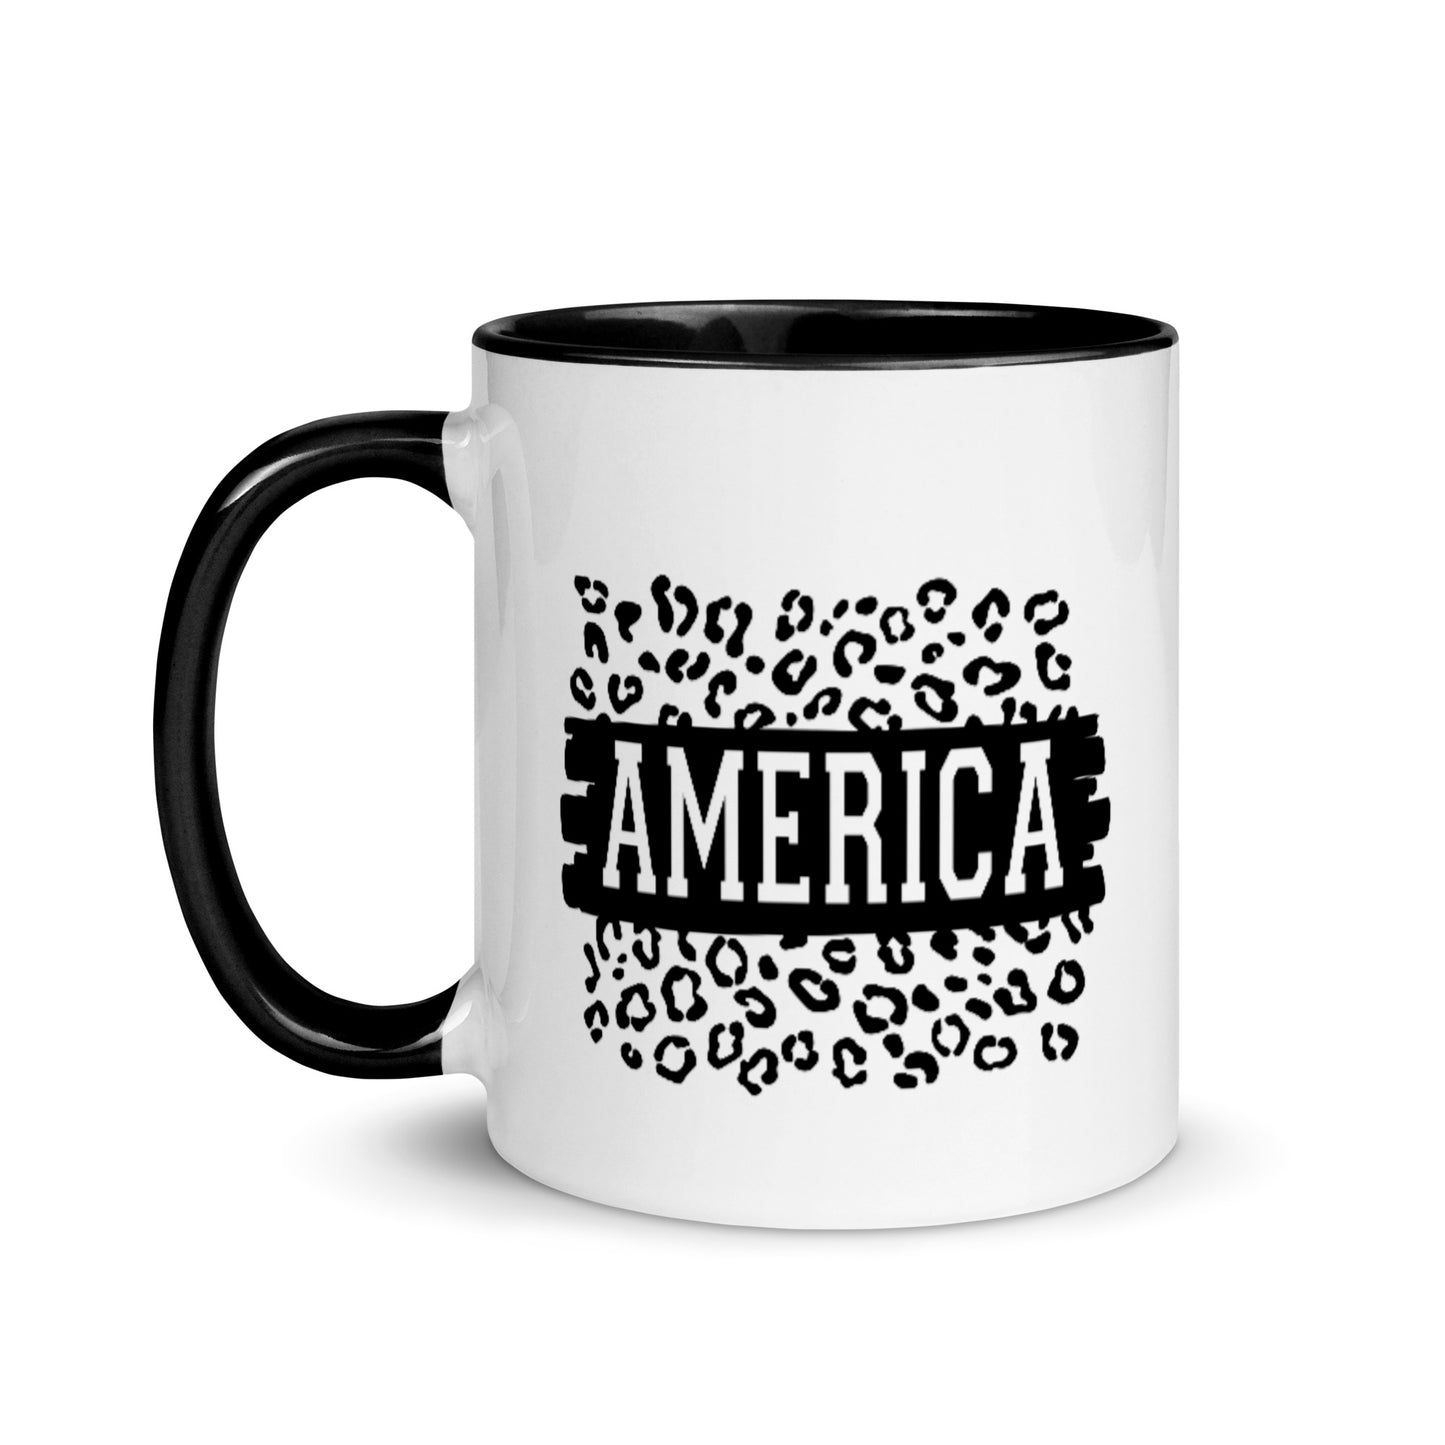 America Mug with Color Inside